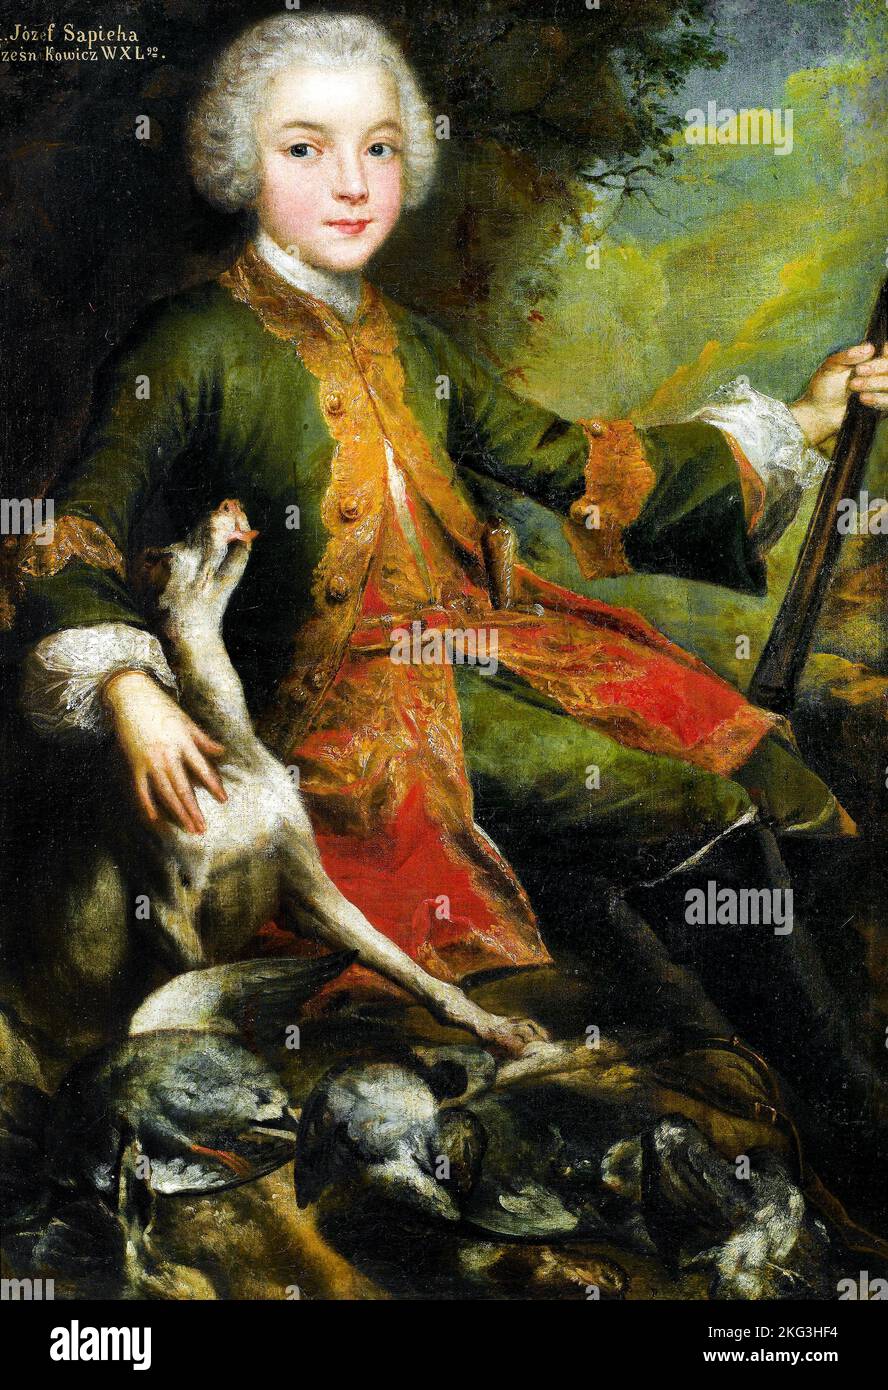 Augustyn Mirys; Portrait of Jozef Sapieha; 1740; Oil on canvas; King John III Palace Museum, Warsaw, Poland. Stock Photo